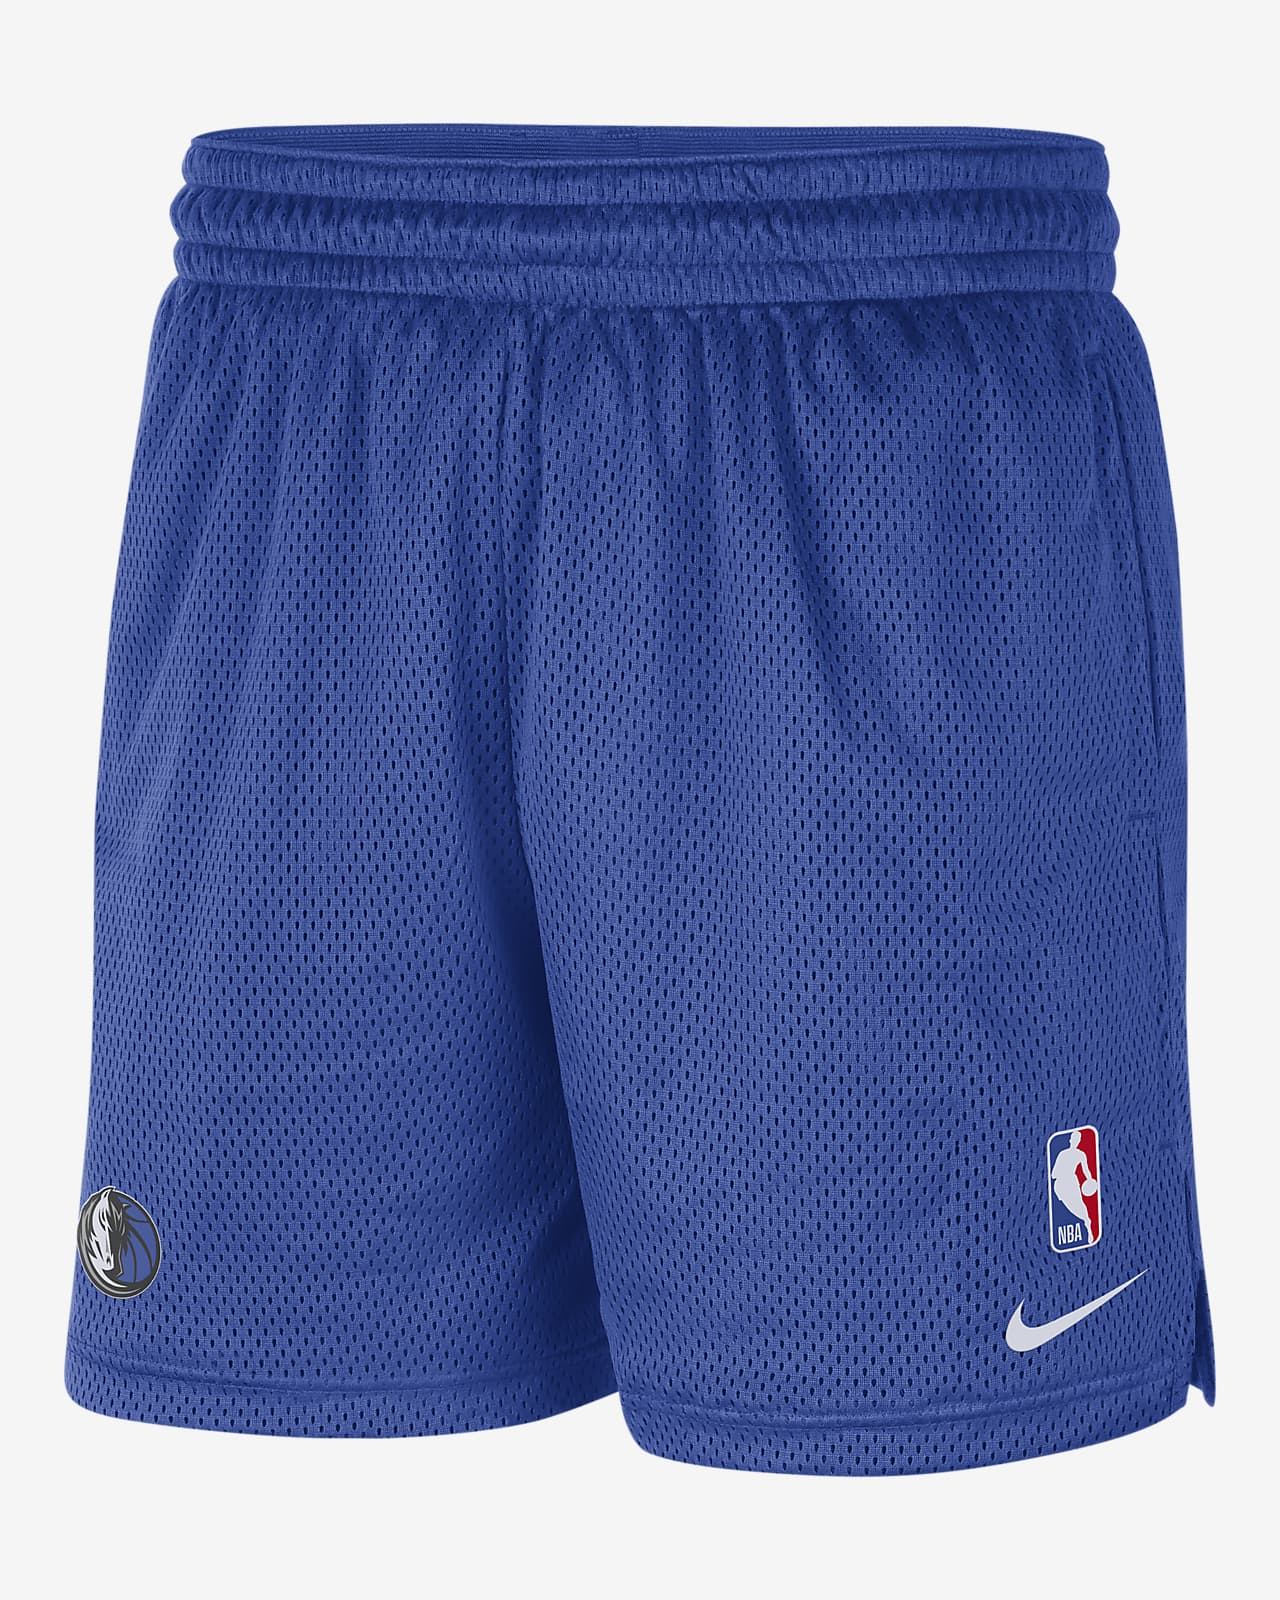 Shorts Nike NBA para hombre Dallas Mavericks